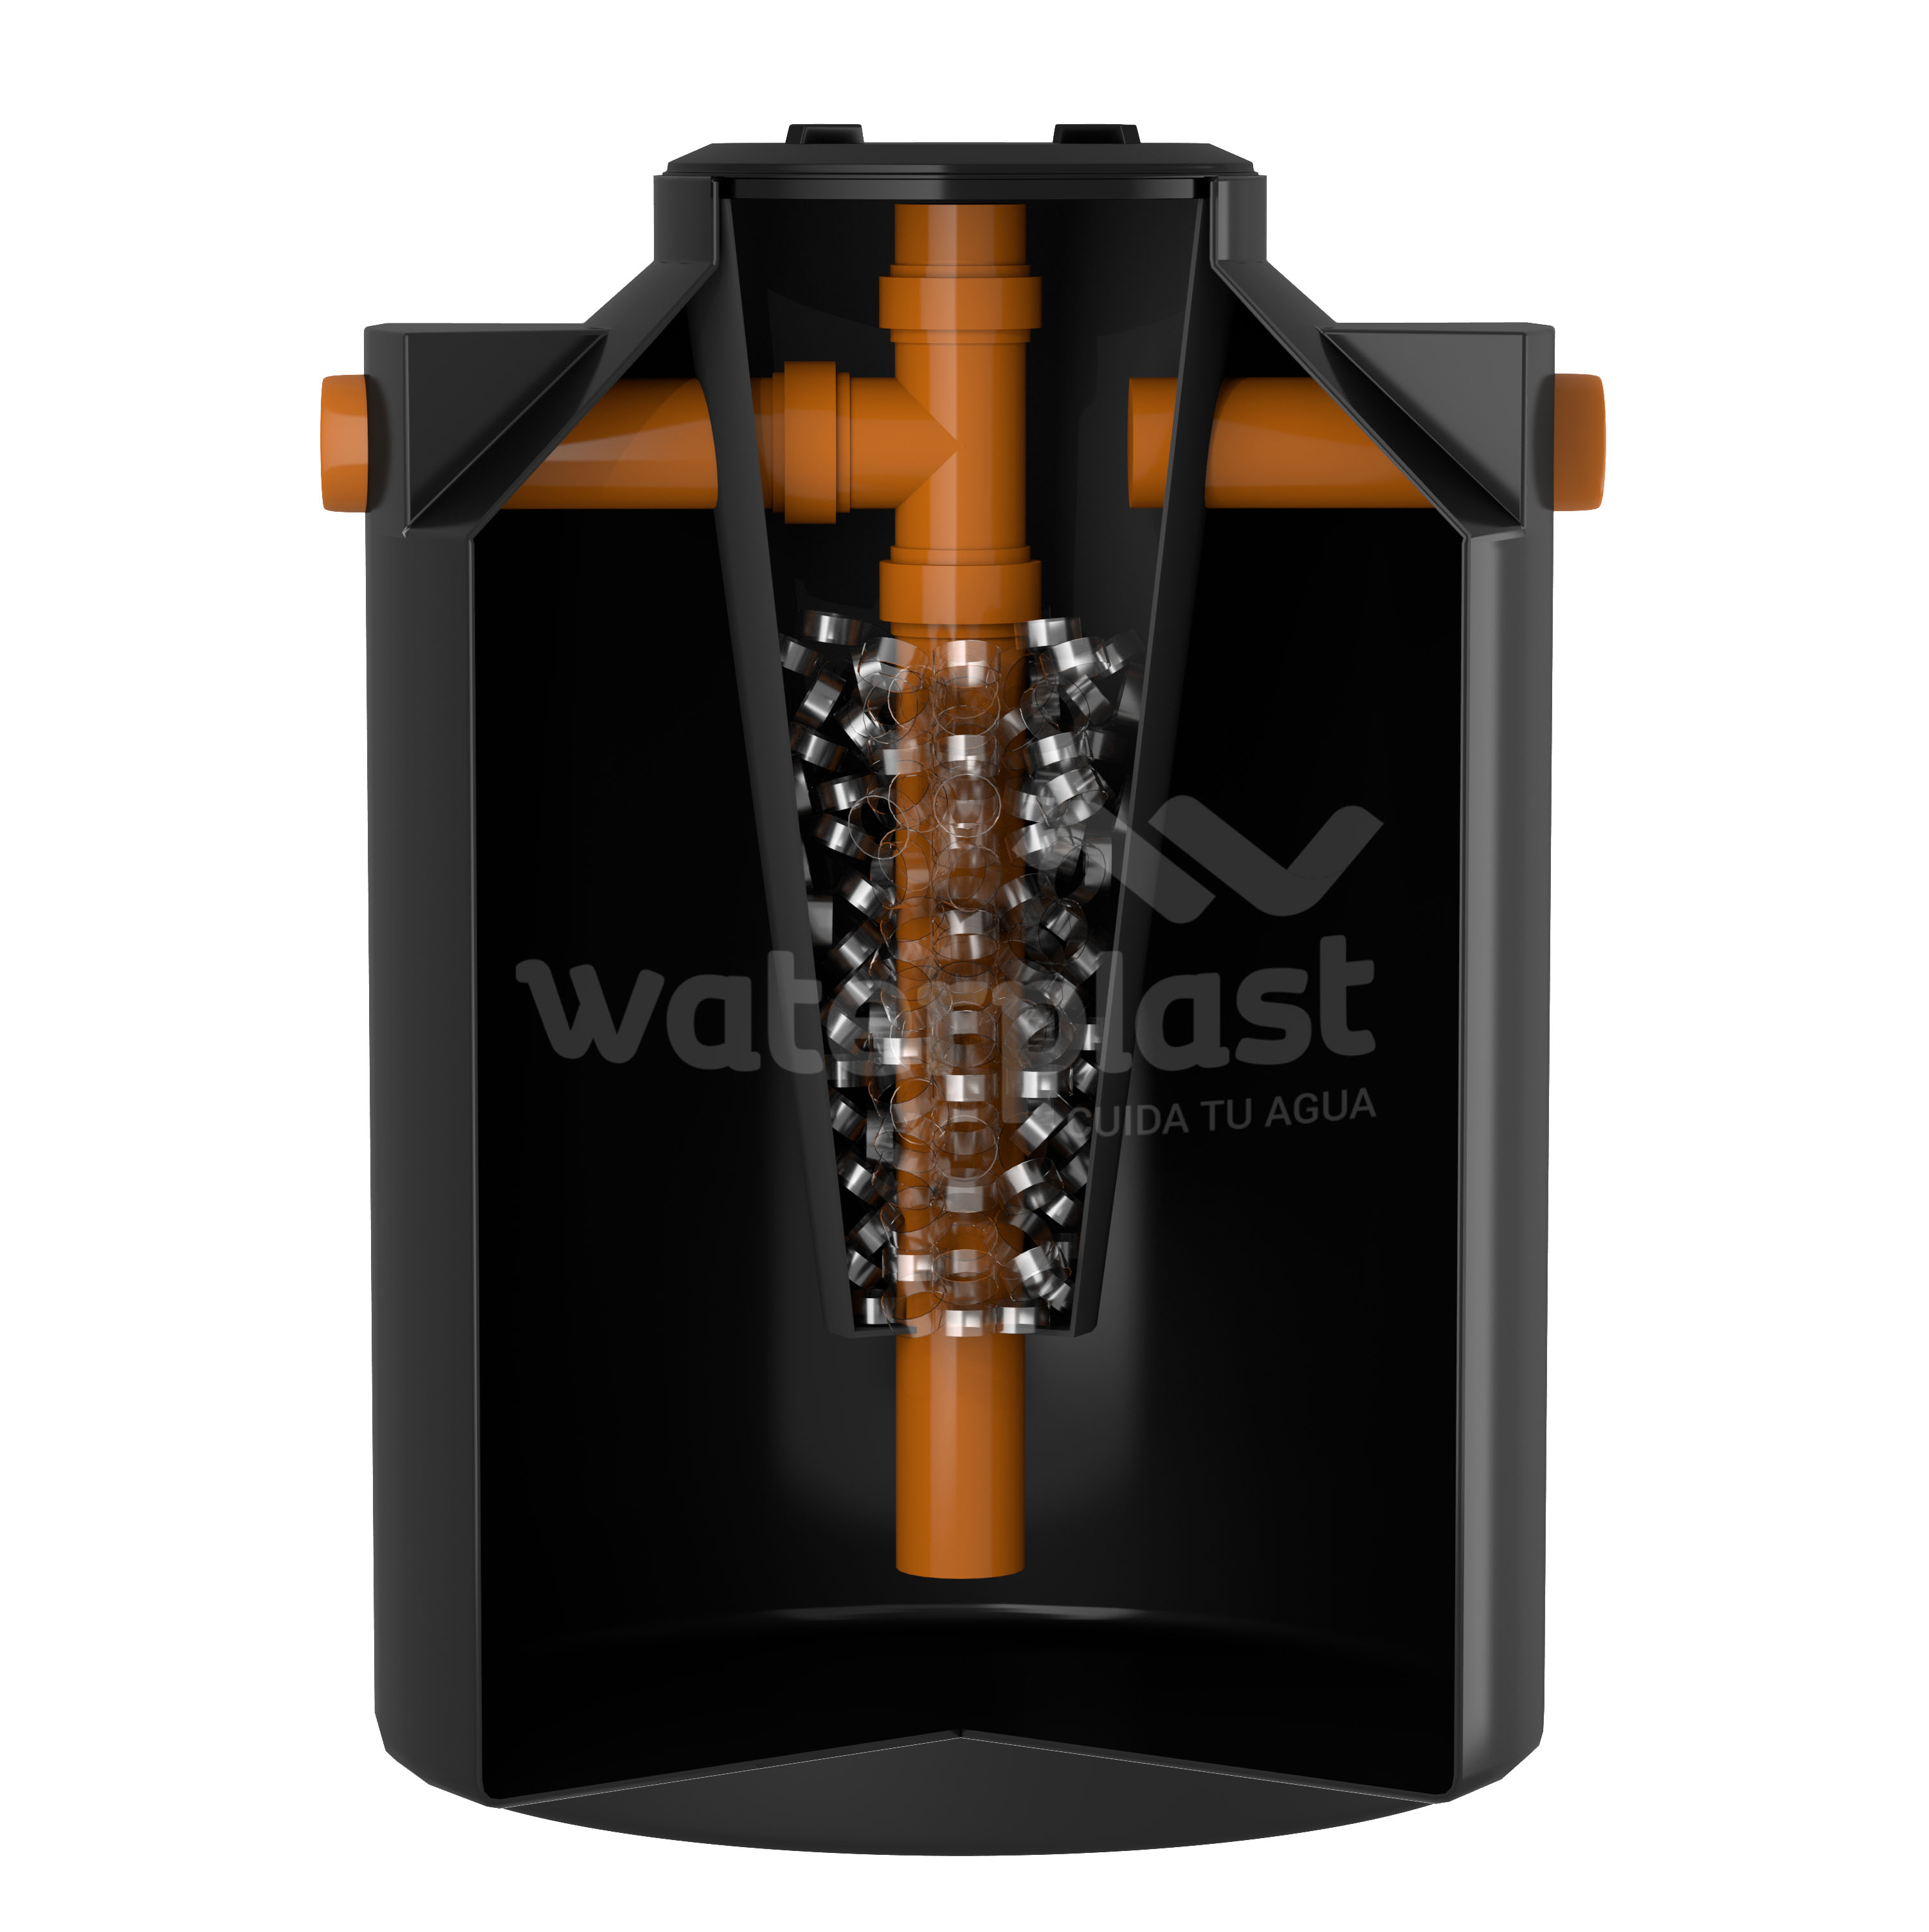 Tanque Biodigestor 600 Lts Waterplast